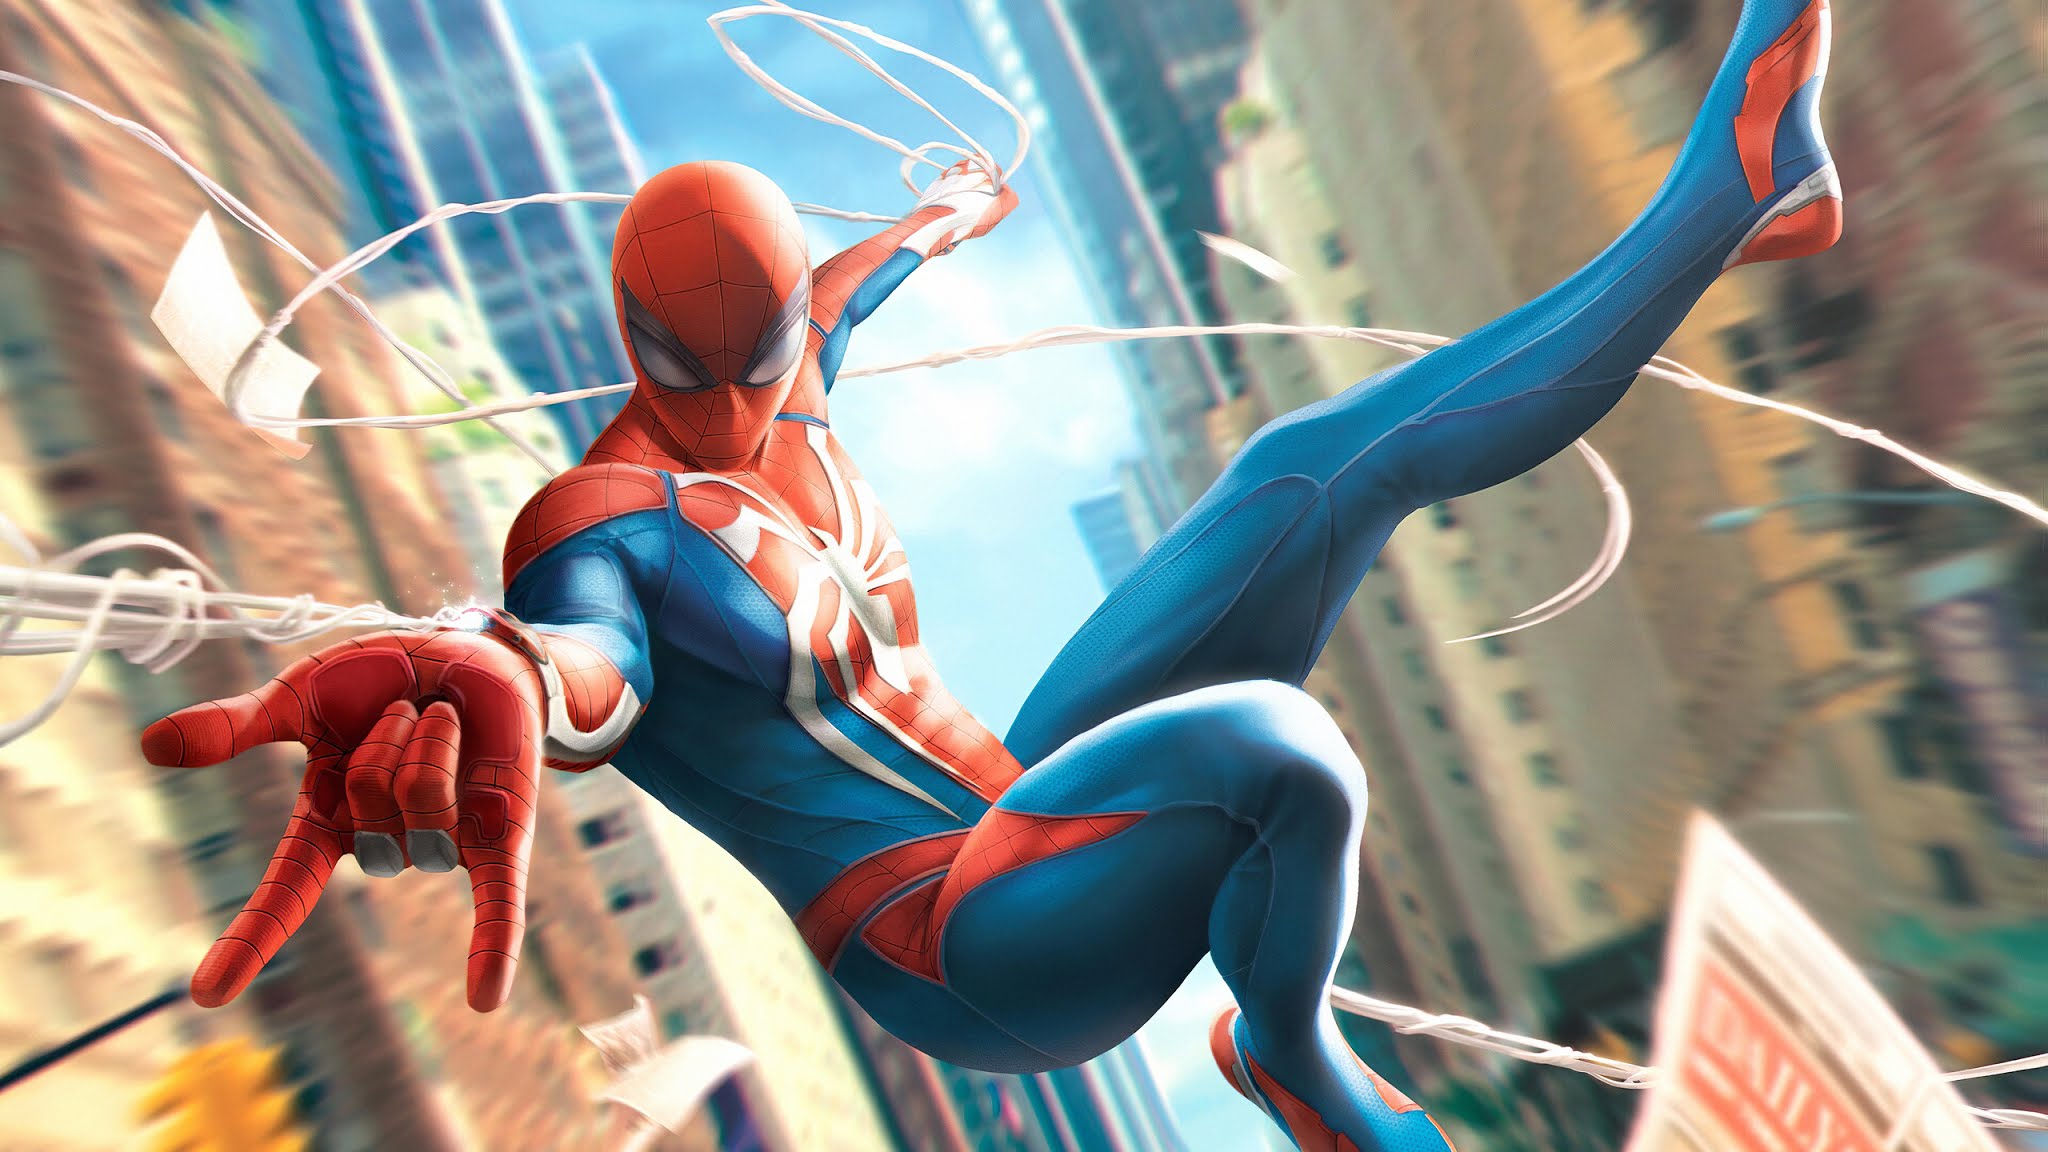 Spiderman, Hd, 4k, Superheroes, Artwork, Digital Art, - Spiderman Wallpaper  Hd - 2048x1152 Wallpaper 